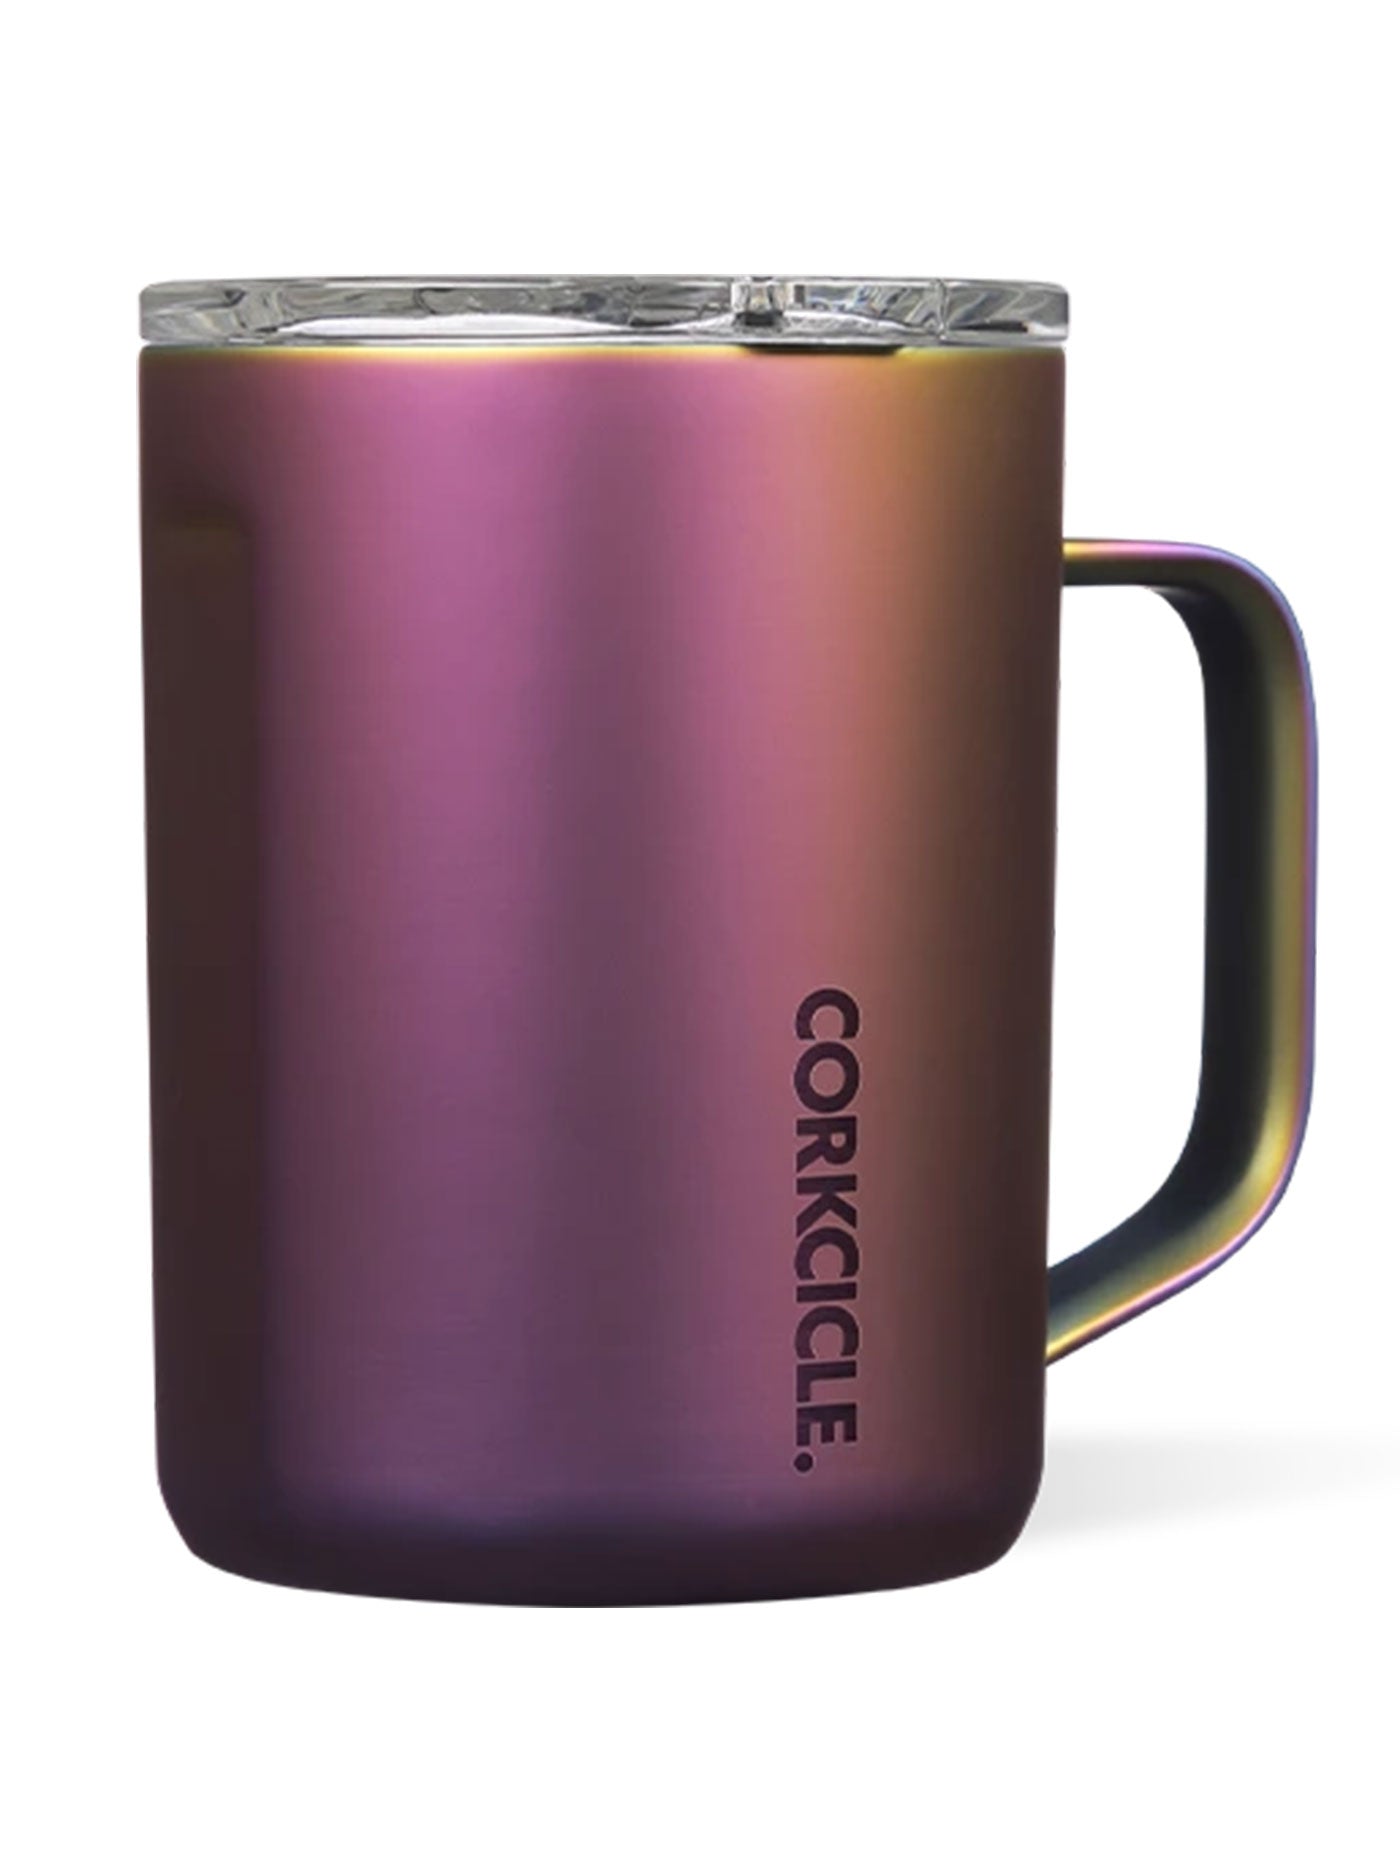 Corkcicle Dragonfly 16oz Coffee Mug